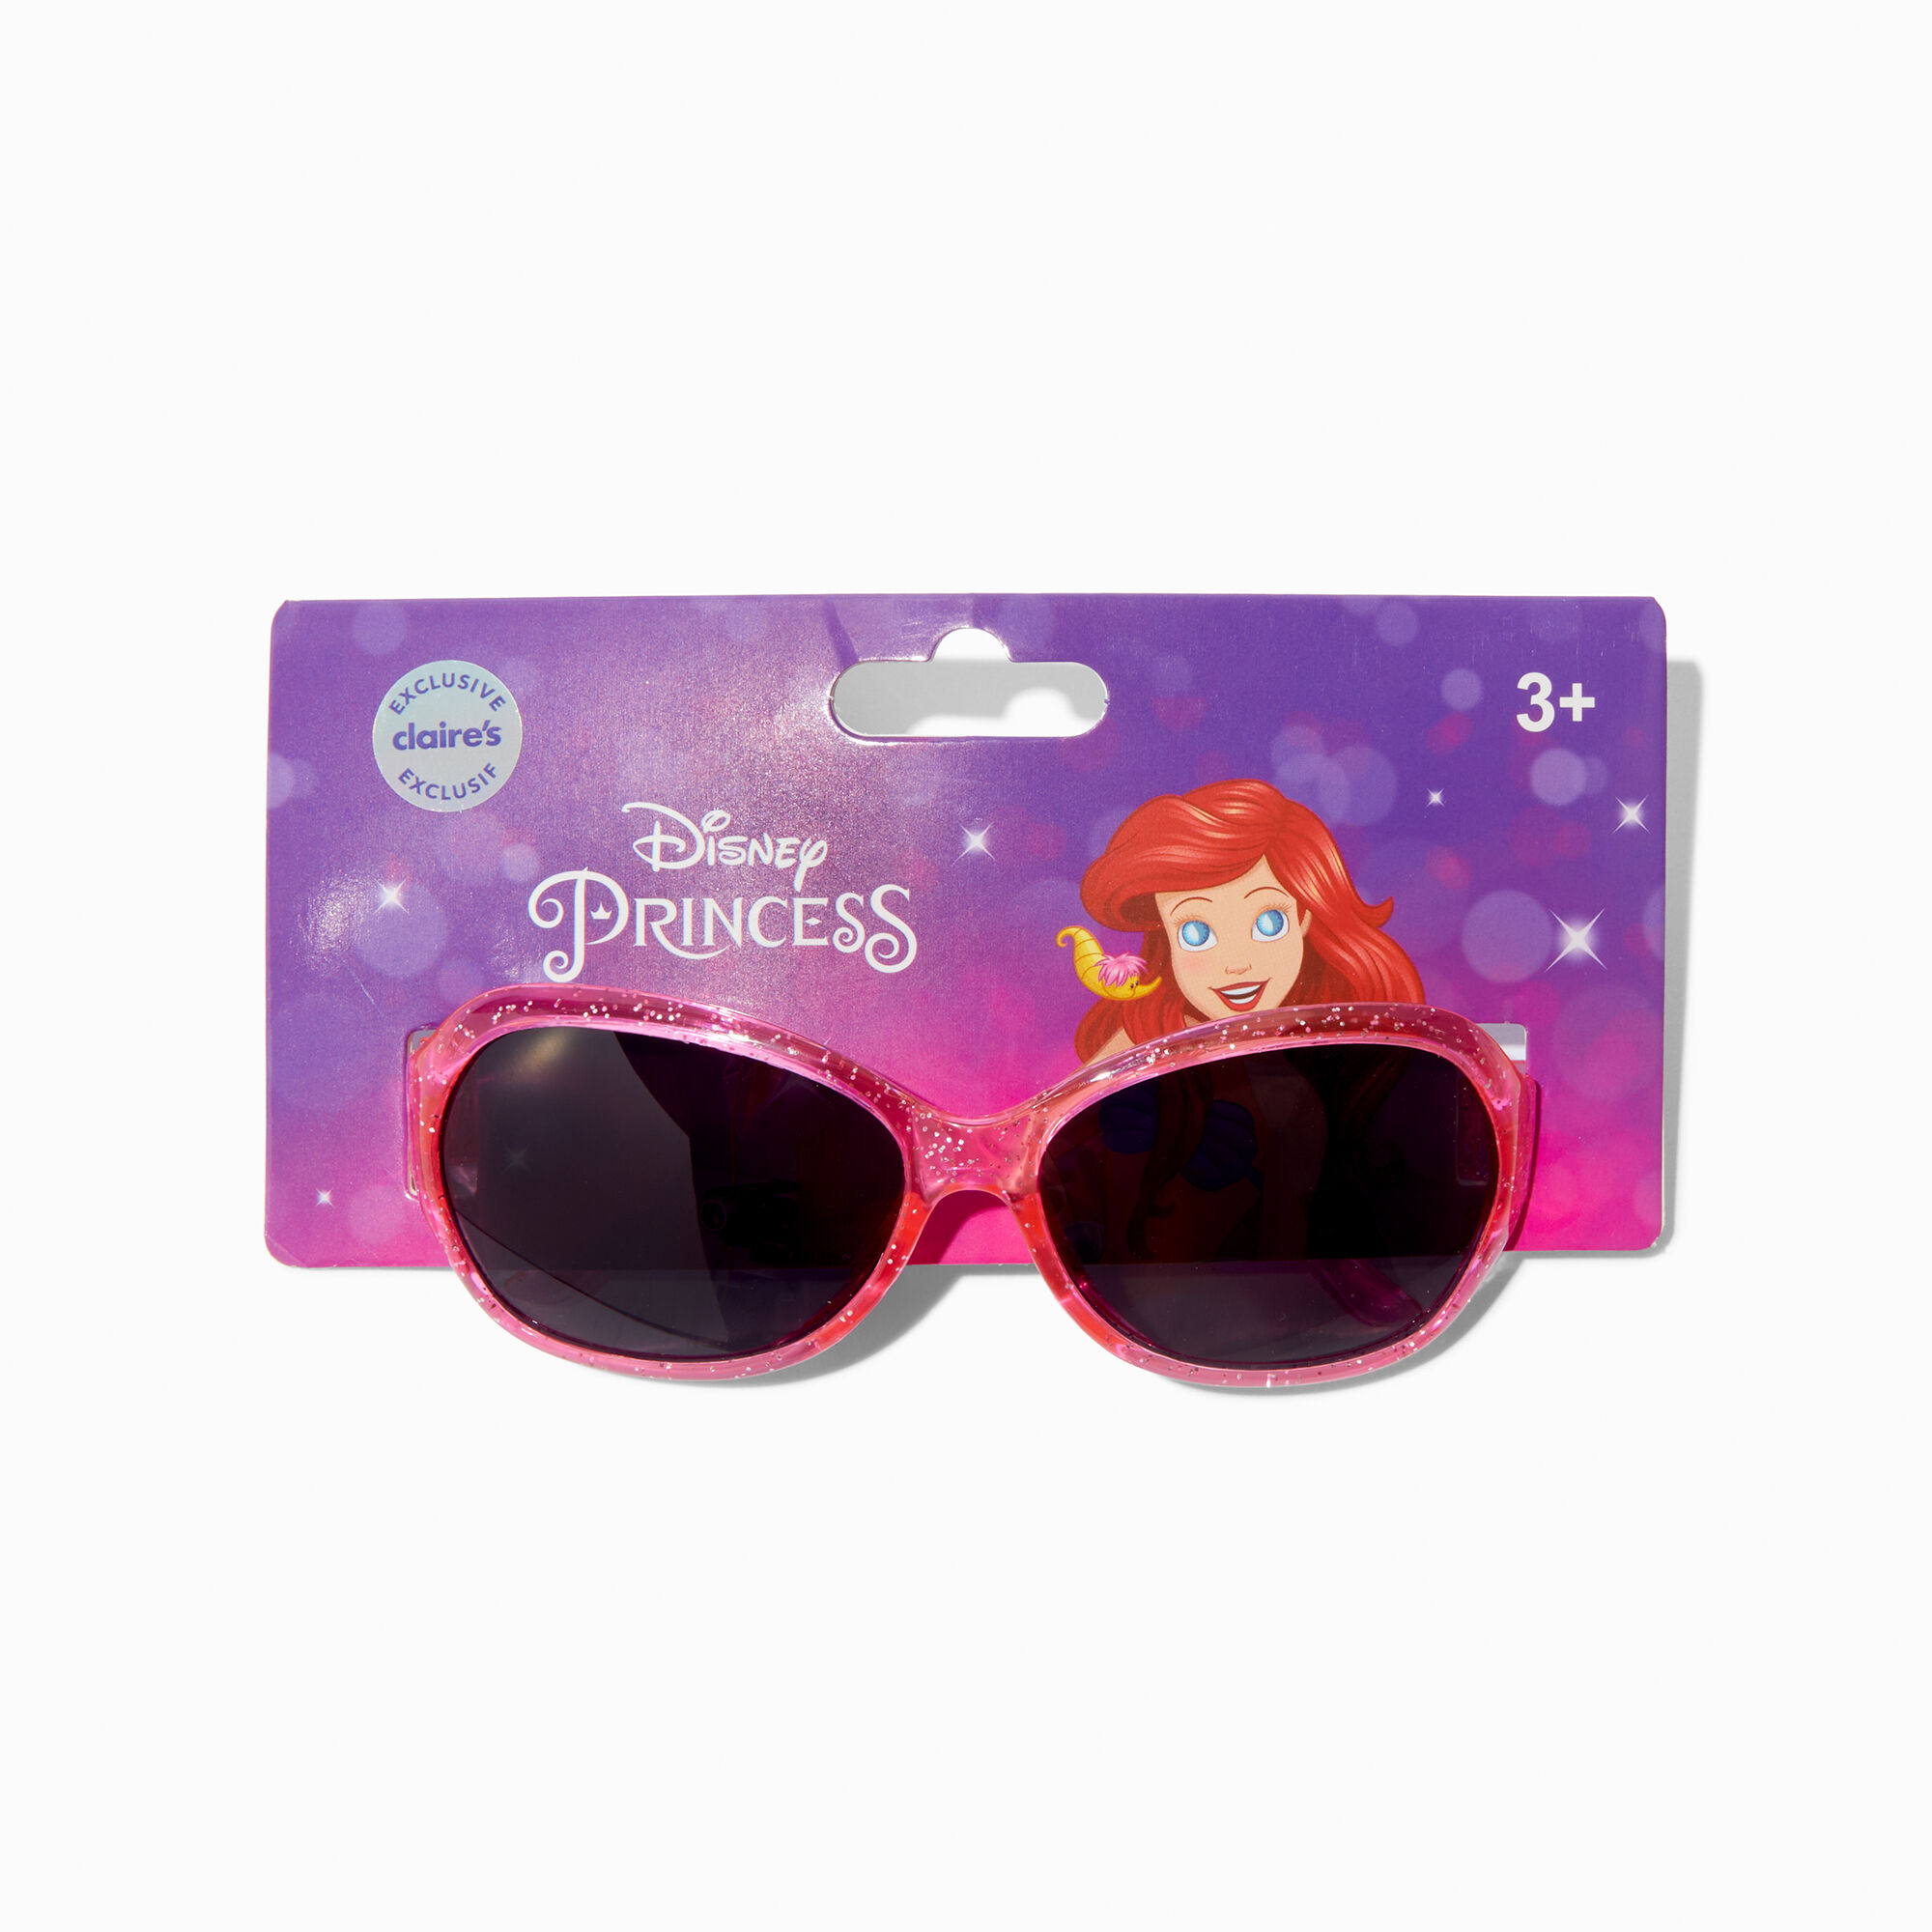 View Disney Princess Claires Exclusive Sunglasses Pink information